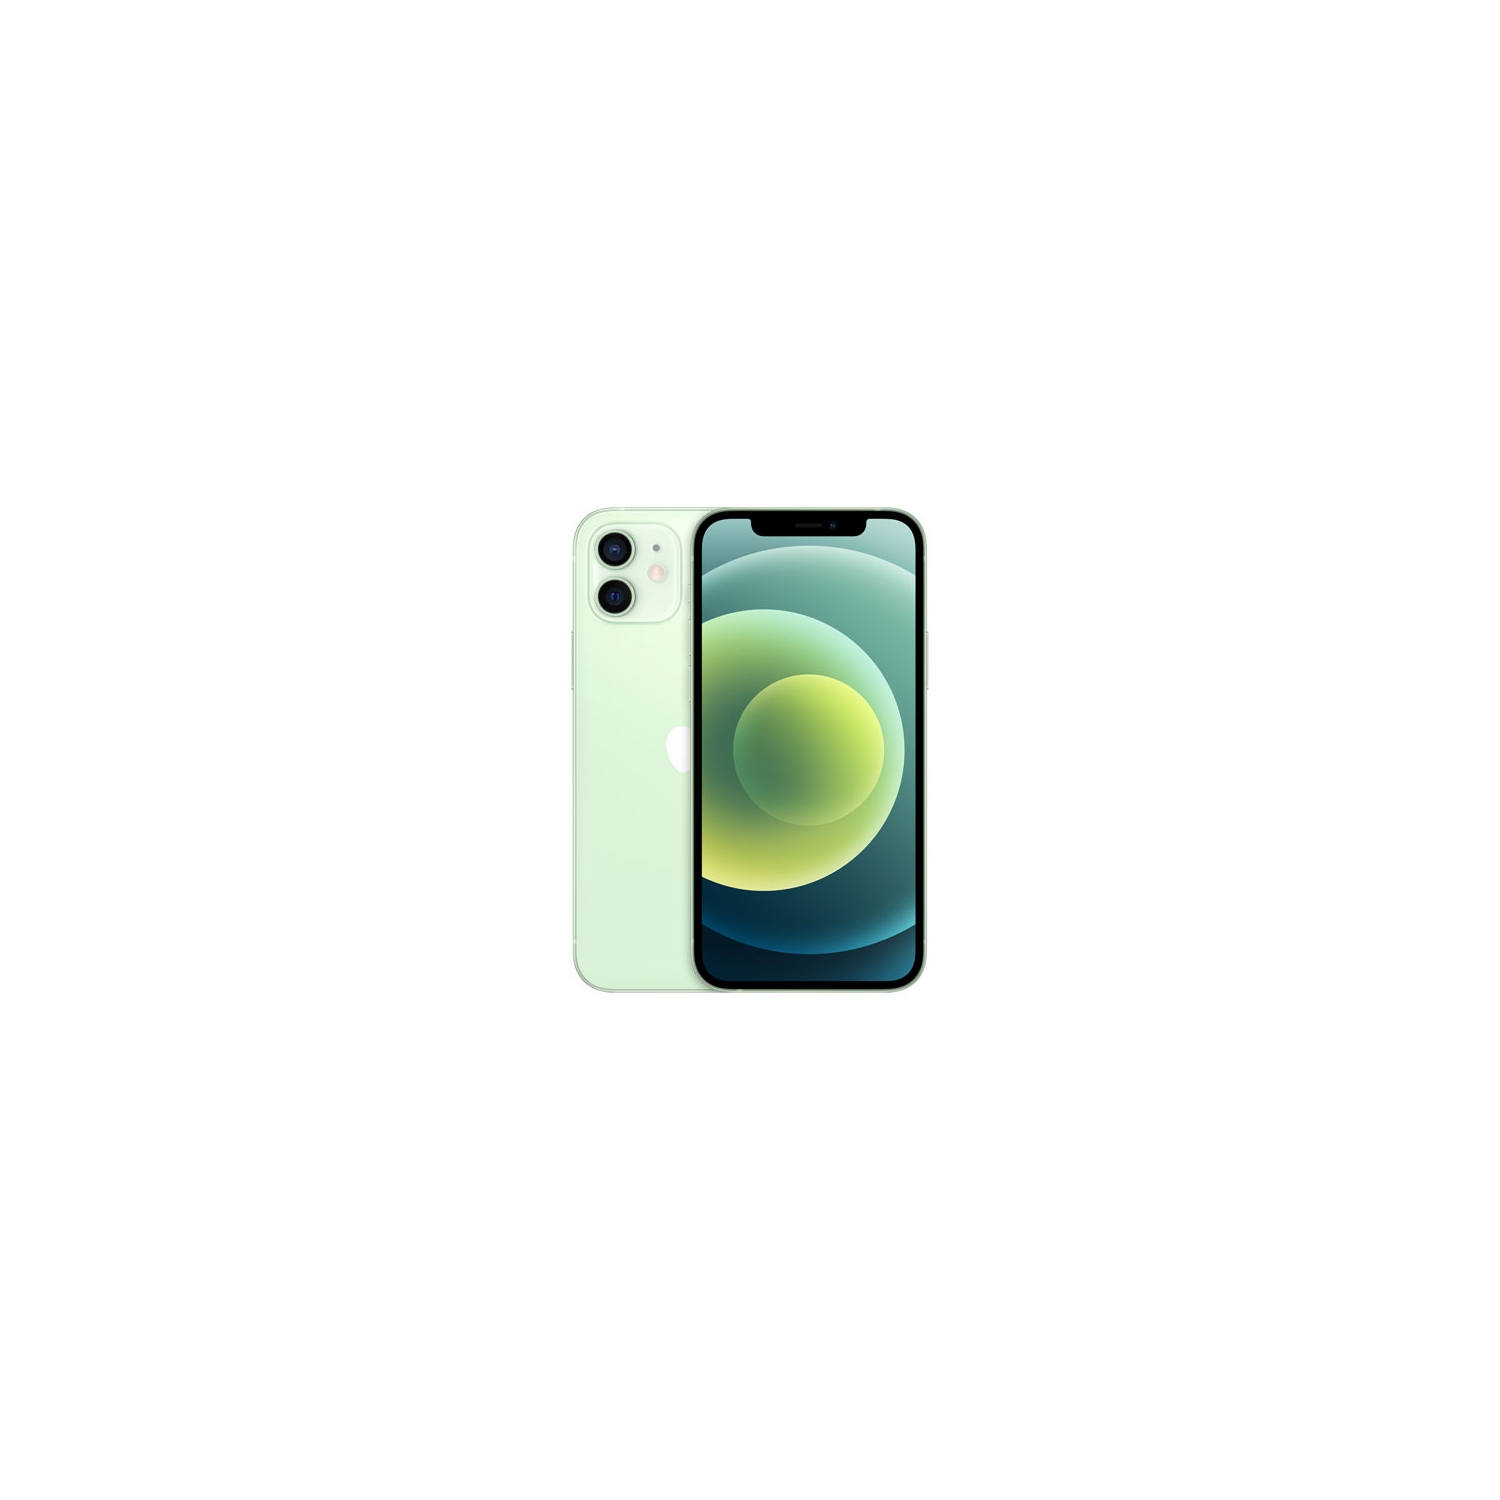 Refurbished (Good) - Apple iPhone 12 64GB Smartphone - Green - Unlocked